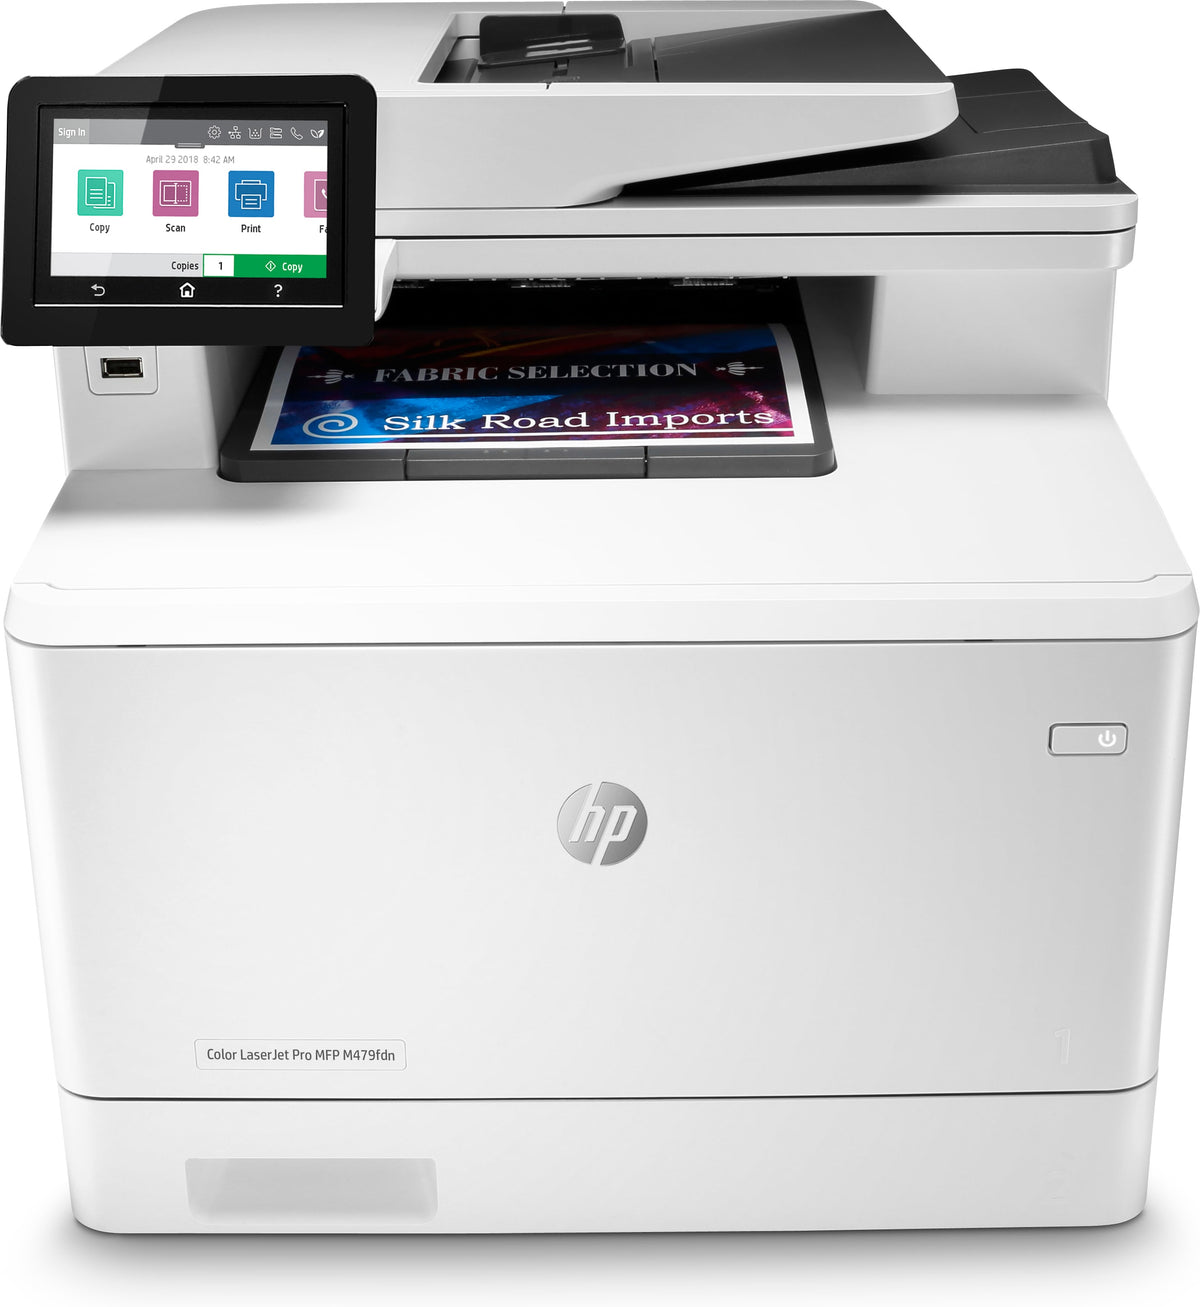 HP Color LaserJet Pro MFP M479fdn - Impresora multifunción - Color - Láser - Legal (216 x 356 mm) (original) - A4/Legal (soportes) - hasta 27 ppm (copia) - hasta 27 ppm (impresión) - 300 hojas - 33,6 Kbps - USB 2.0, LAN, host USB